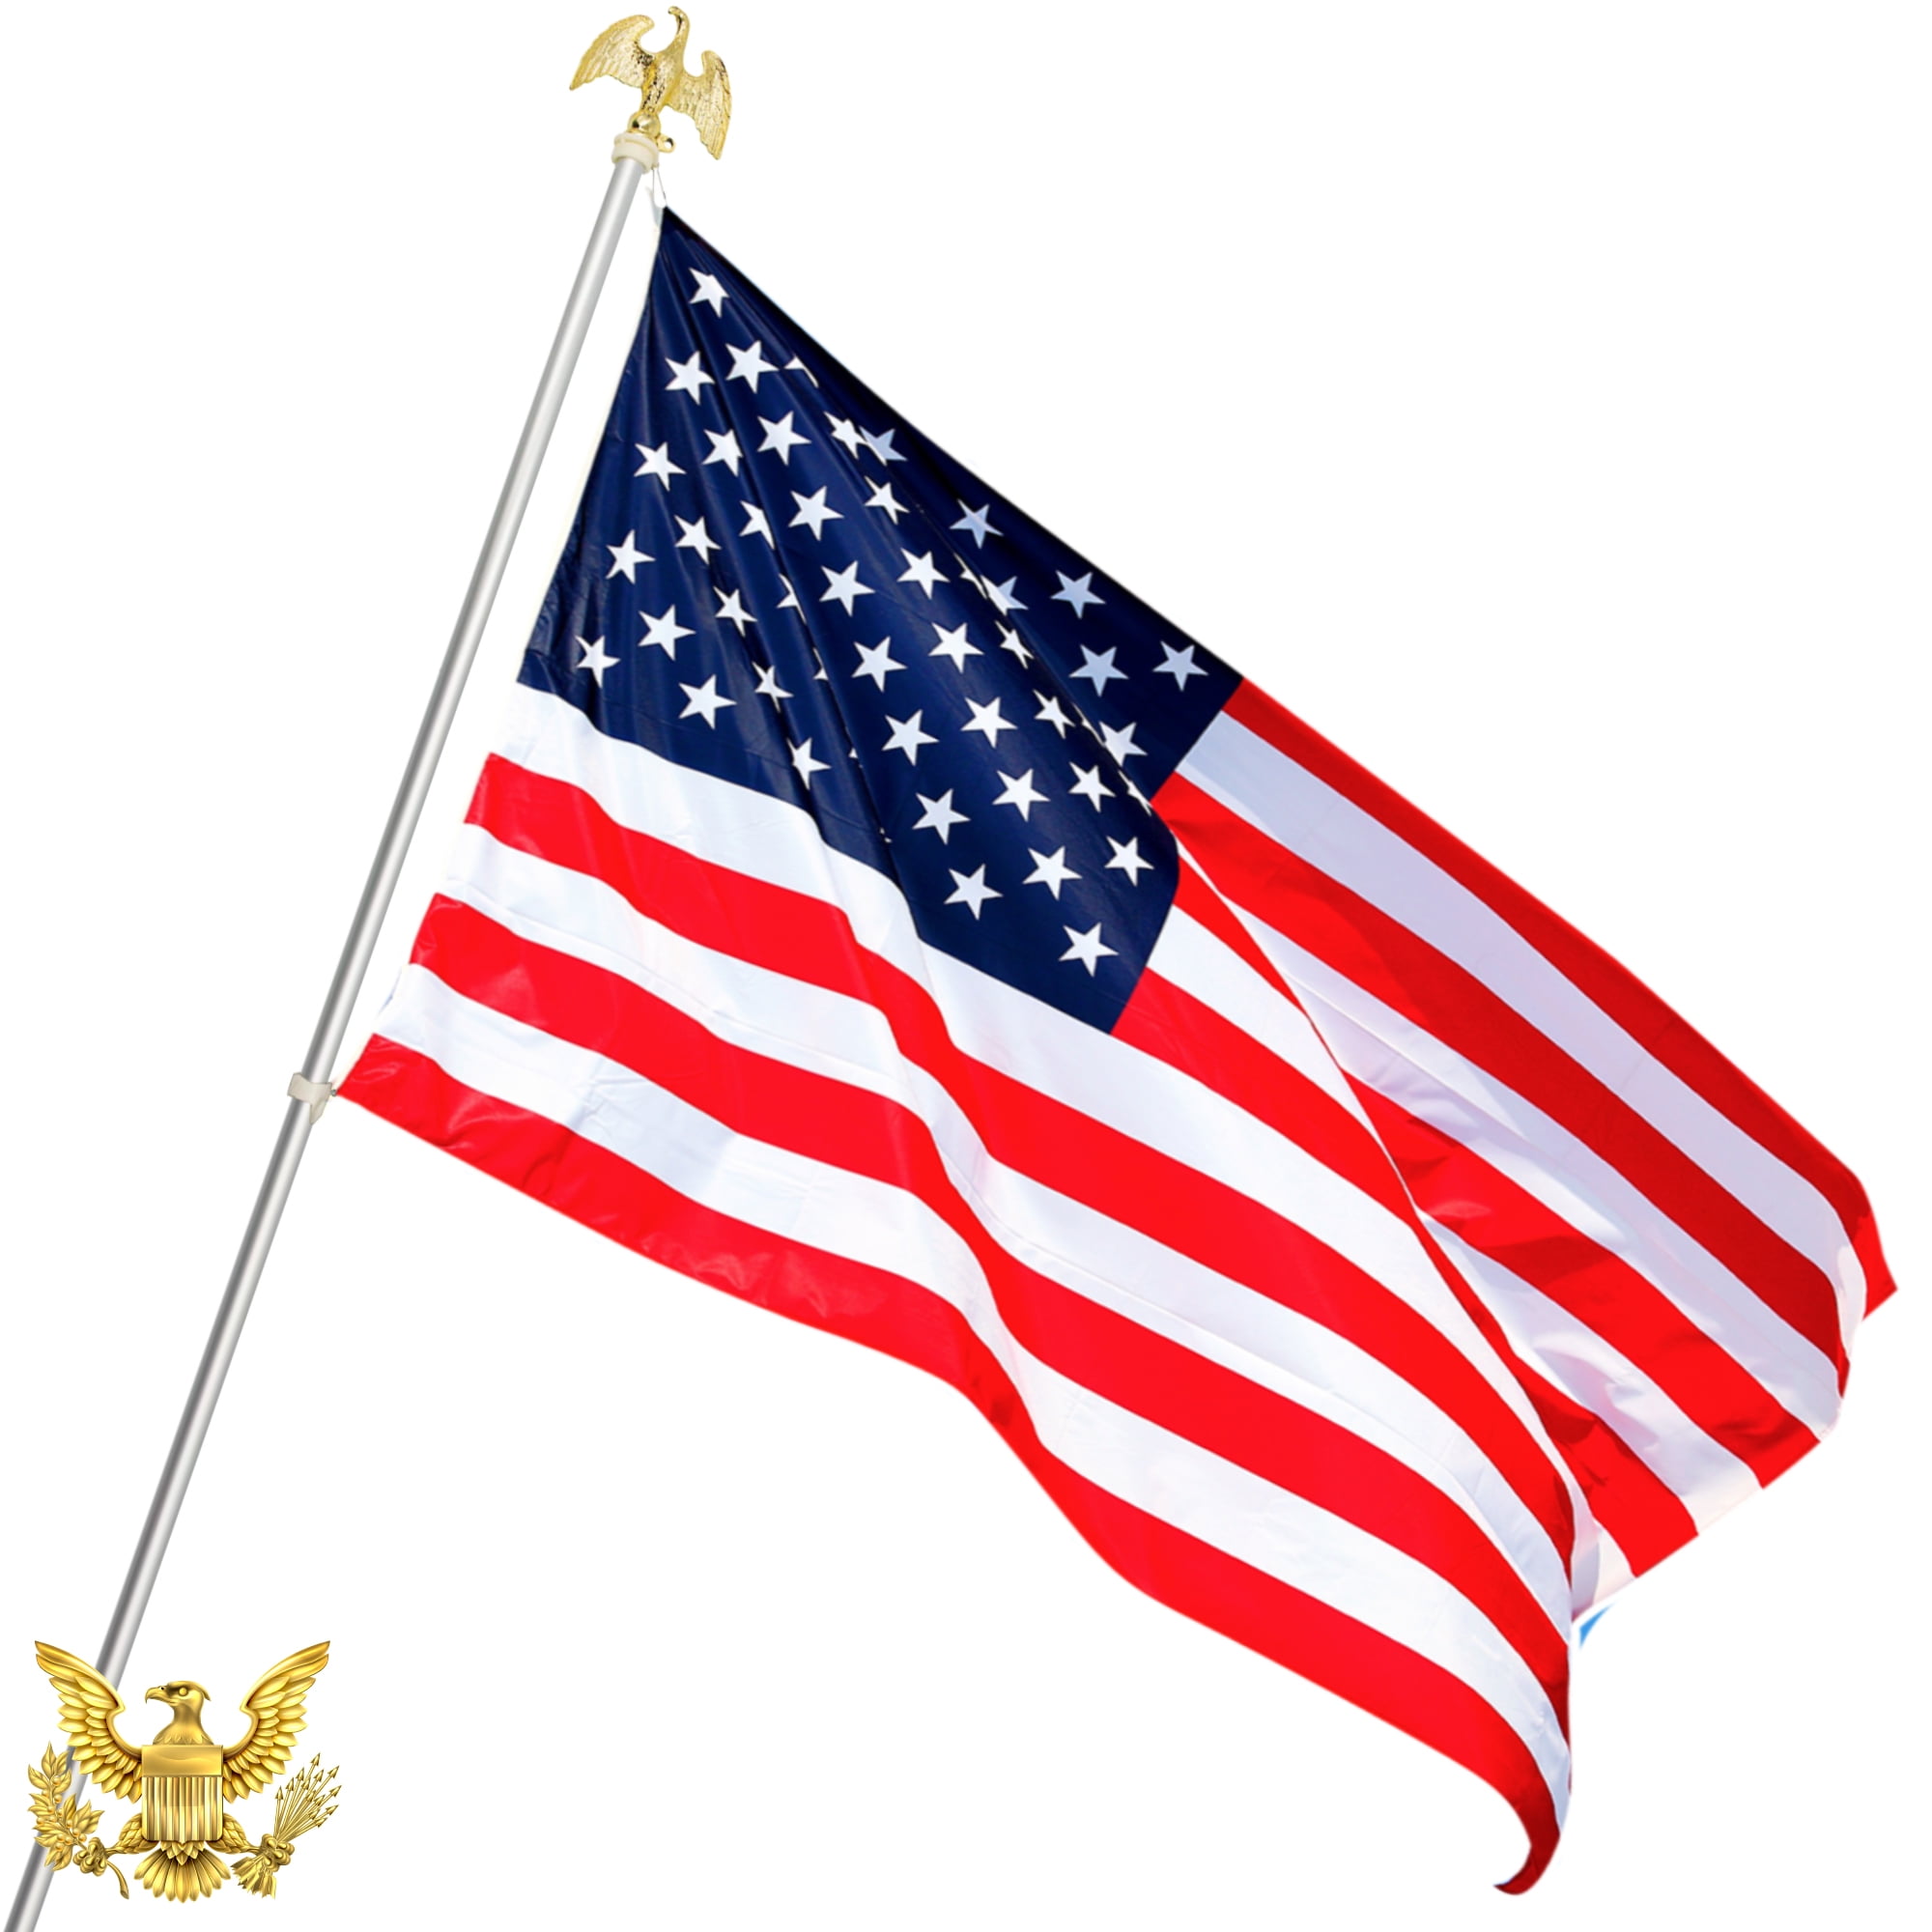 CAR ANTENNA FLAGS FLAGZONE ALUMINUM FLAGPOLE W/ 3'X5' U.S FLAGS & 4 15 FT 2 